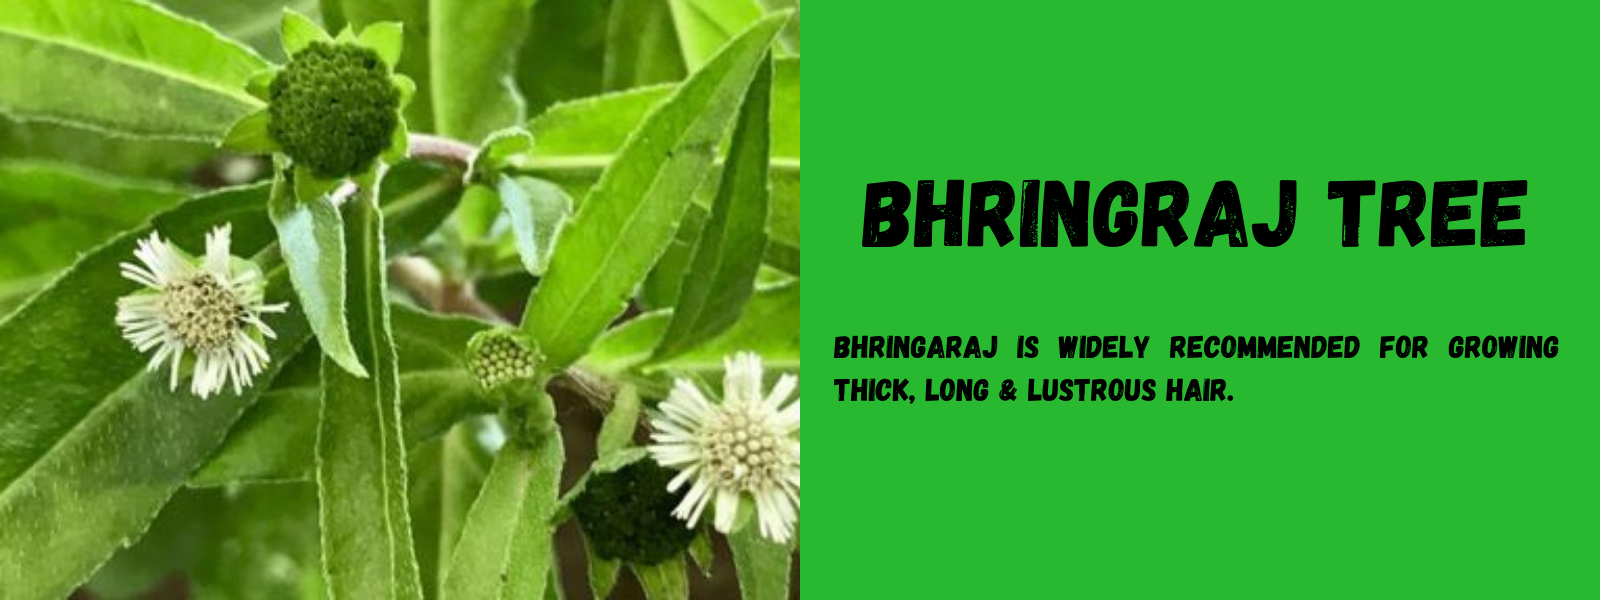 Bhringraj Benefits For Hair And How To Use Bhringraj For Long And Shiny Hair   बल पर इस तरह लग लय भगरज त Hair दखग घन और मलयम यह ह  इसतमल क